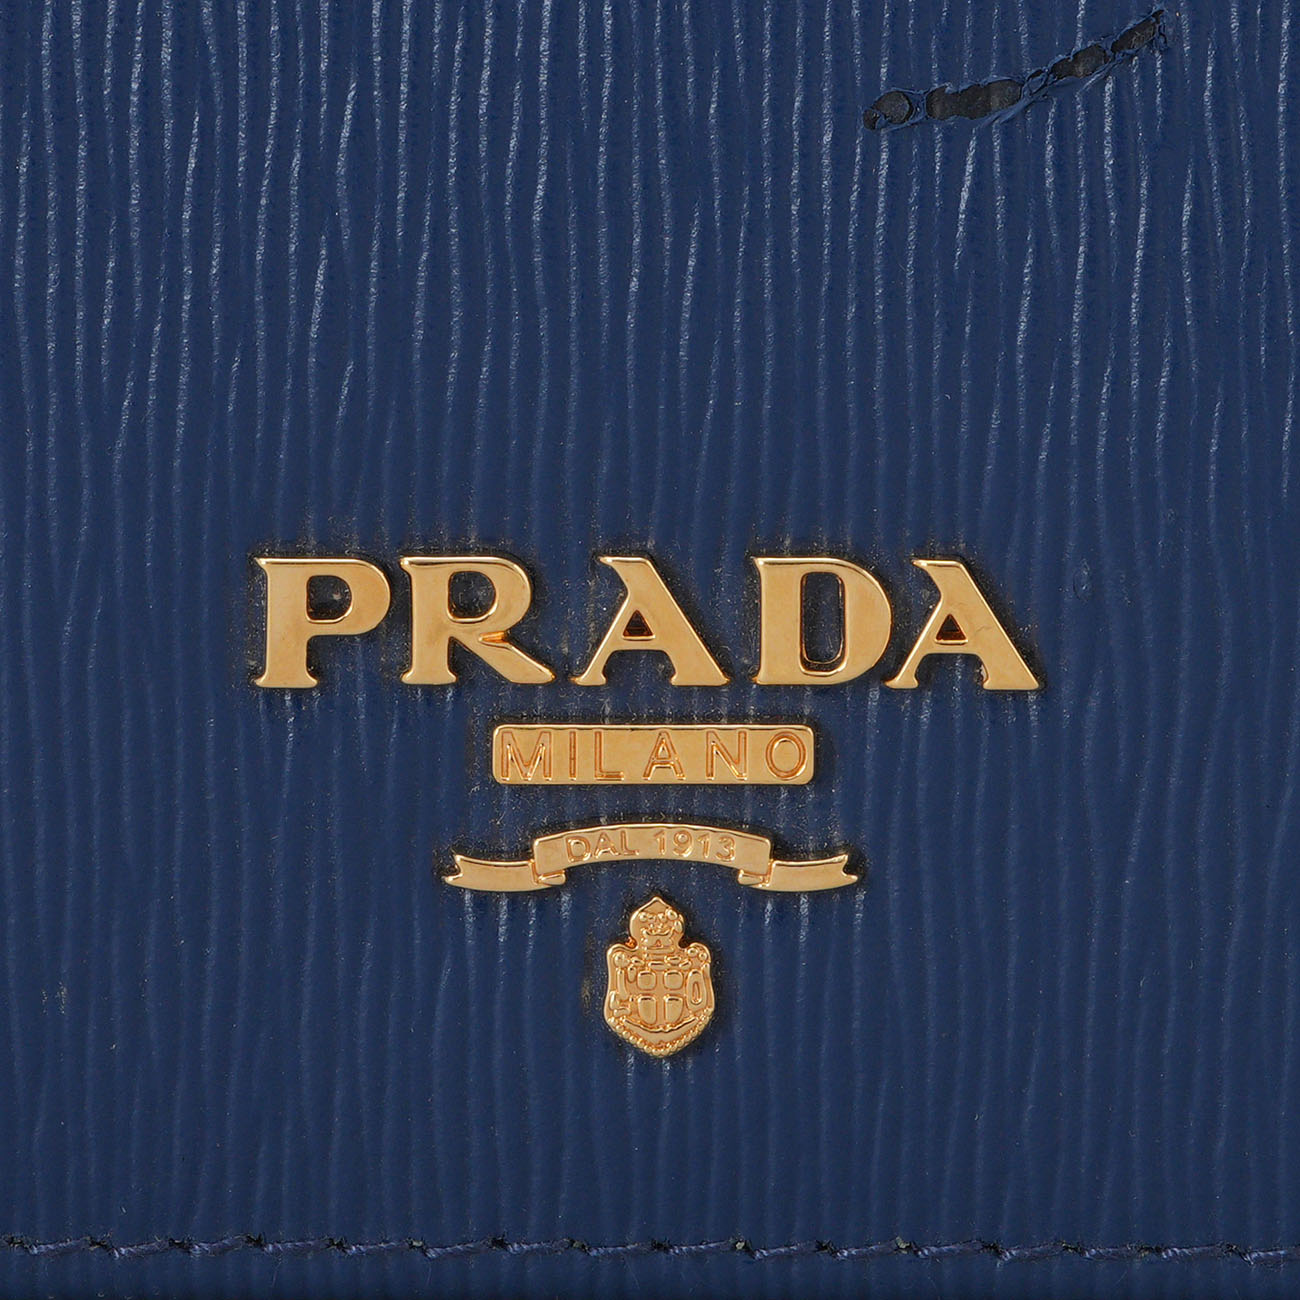 PRADA(USED)프라다 1MC122 사피아노 명함지갑